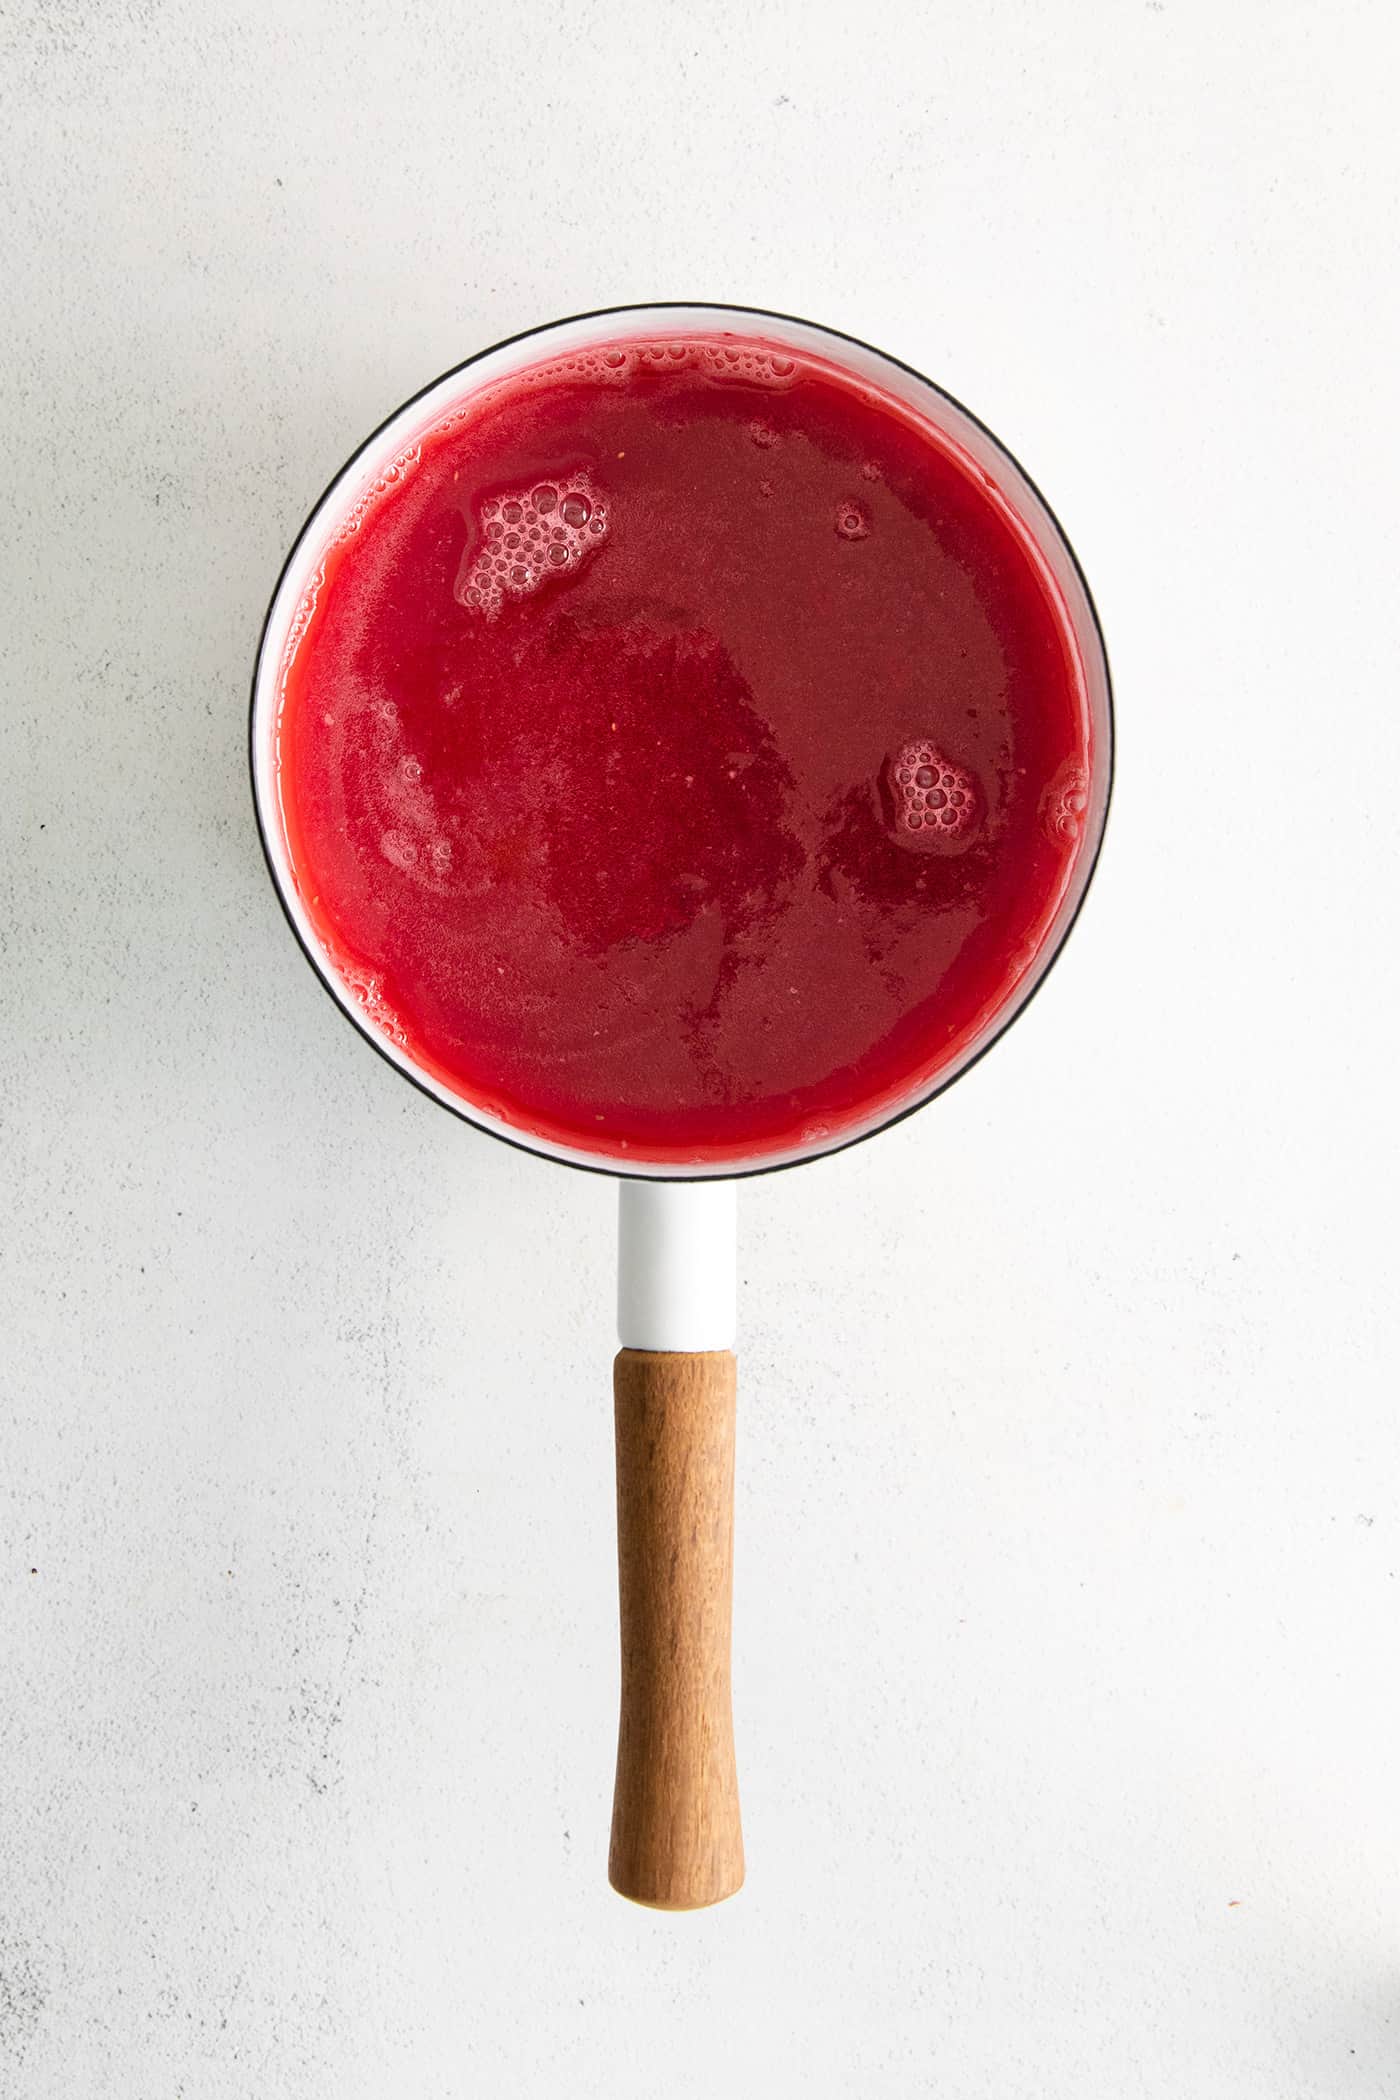 Raspberry rhubarb syrup in a saucepan